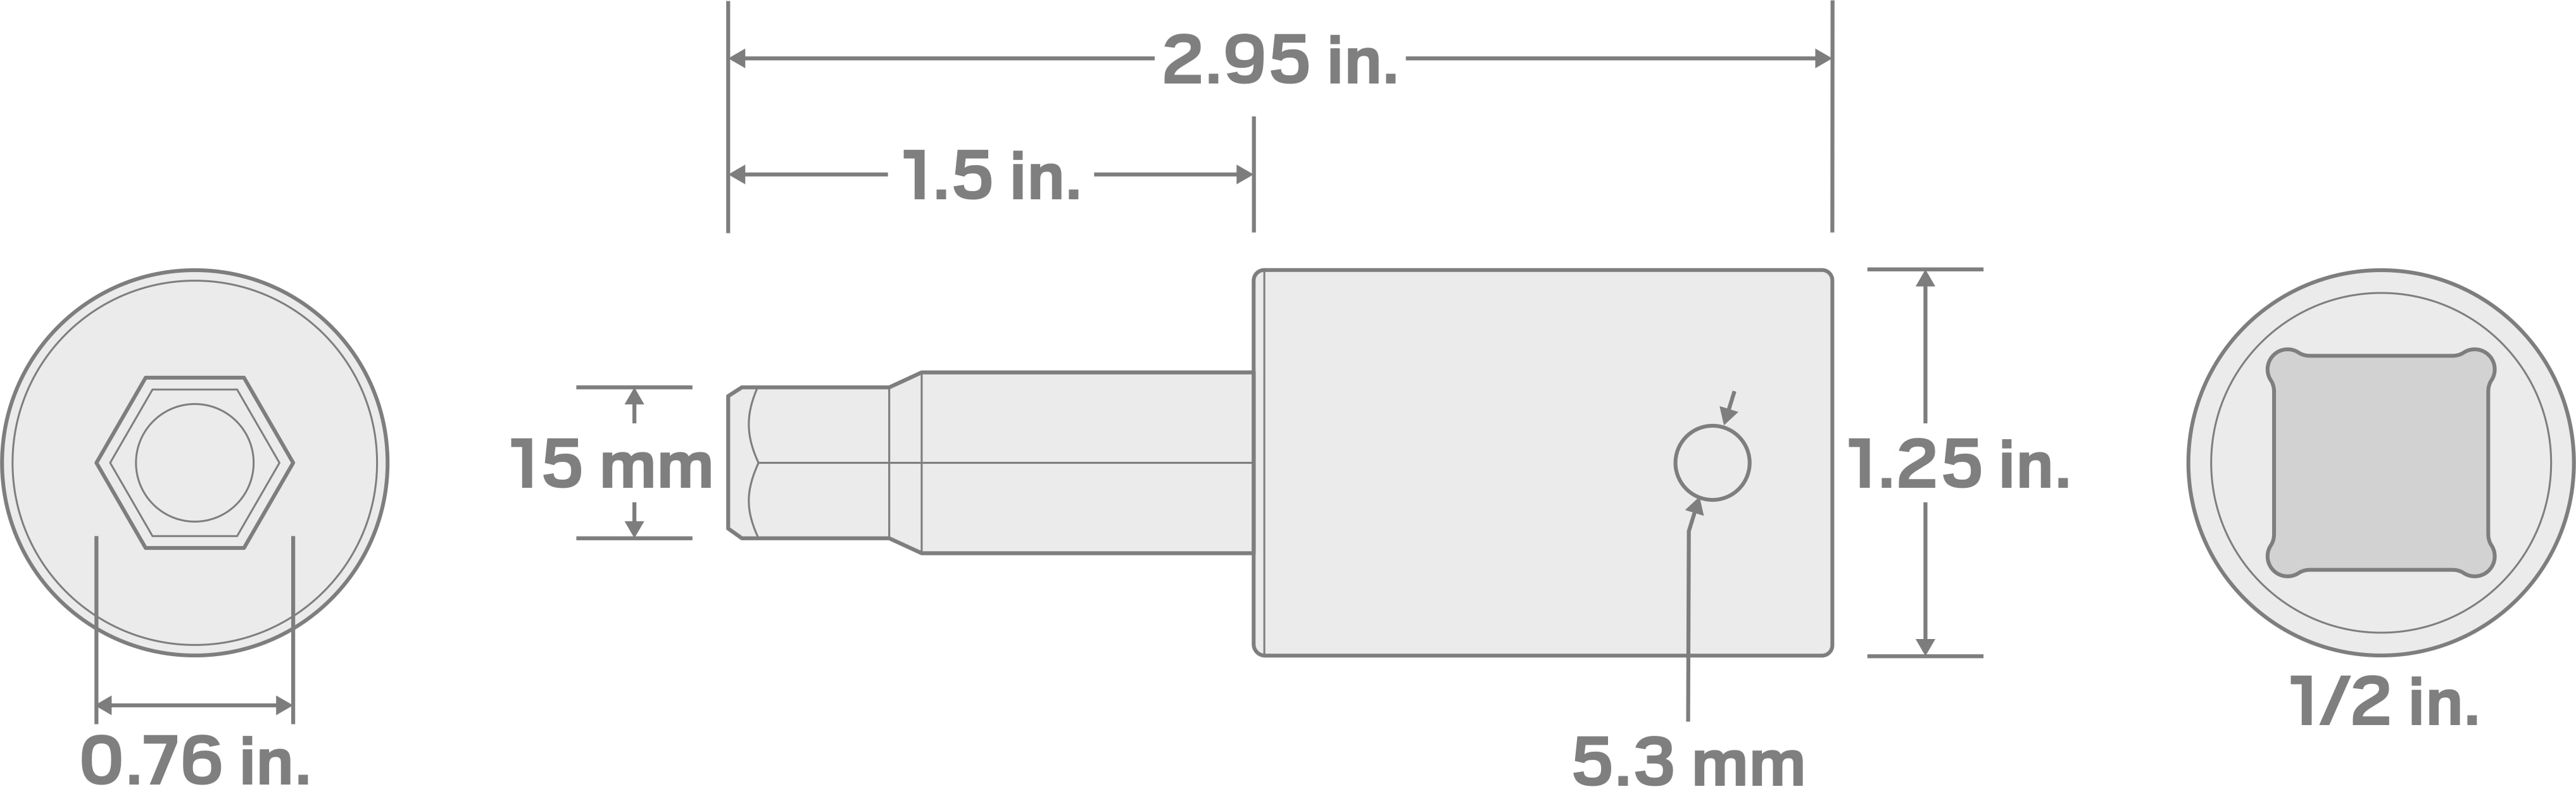 Specs for 1/2 Inch Drive x 15 mm Hex Impact Bit Socket